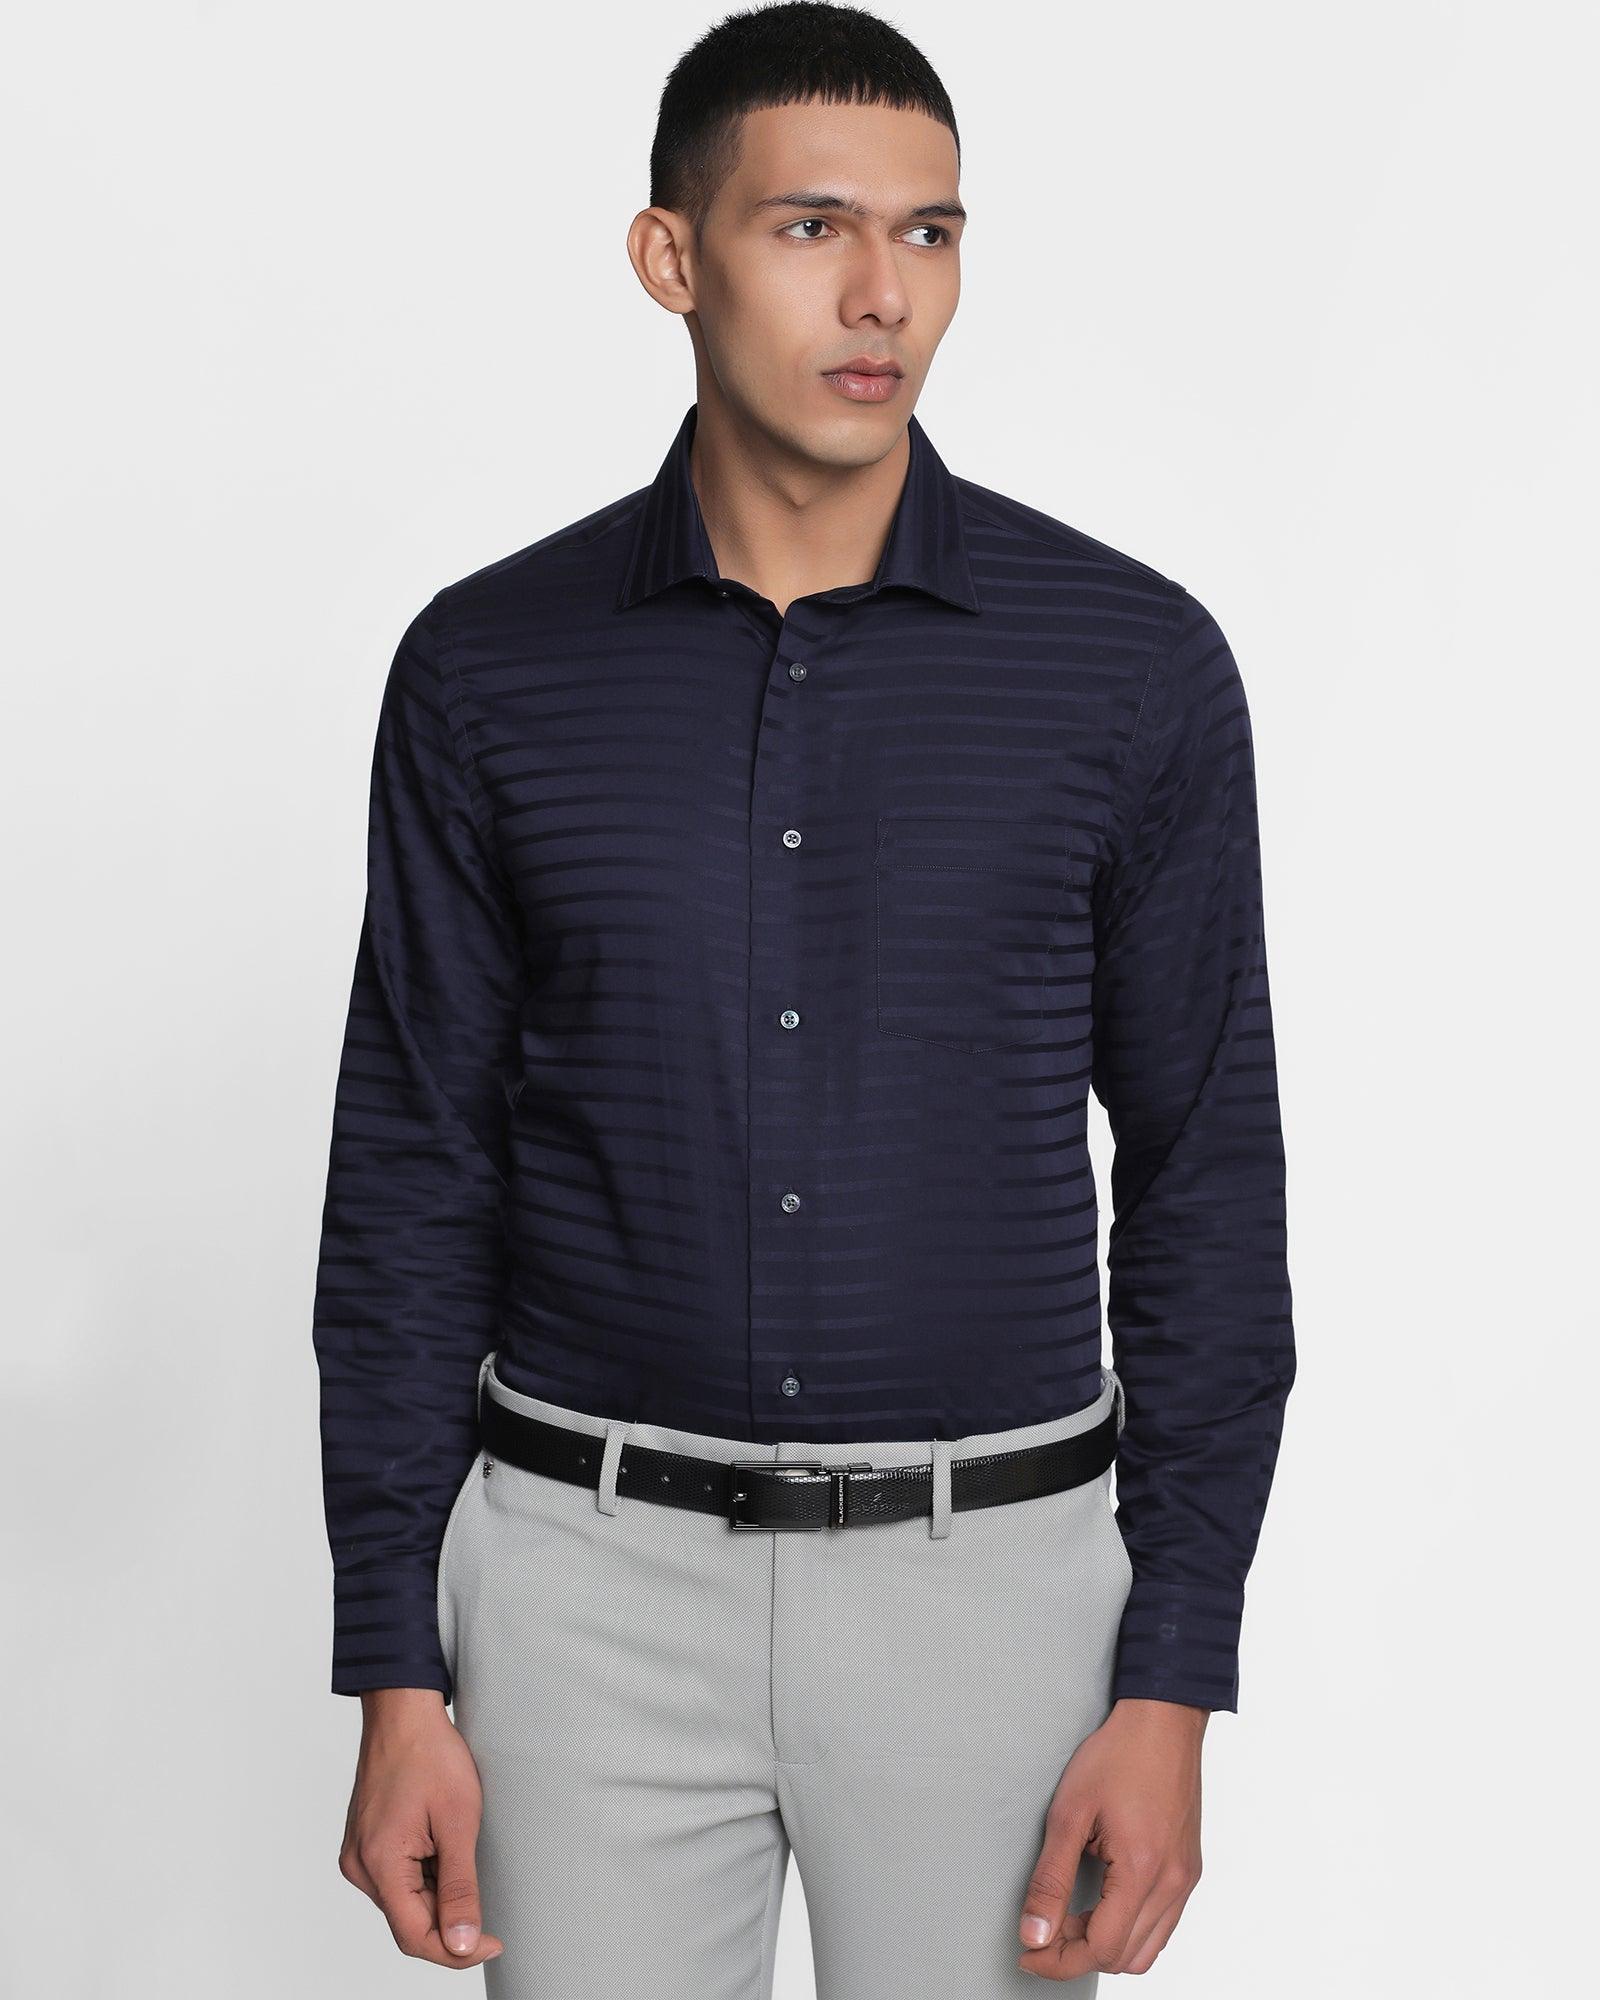 Formal Navy Striped Shirt - Carlos